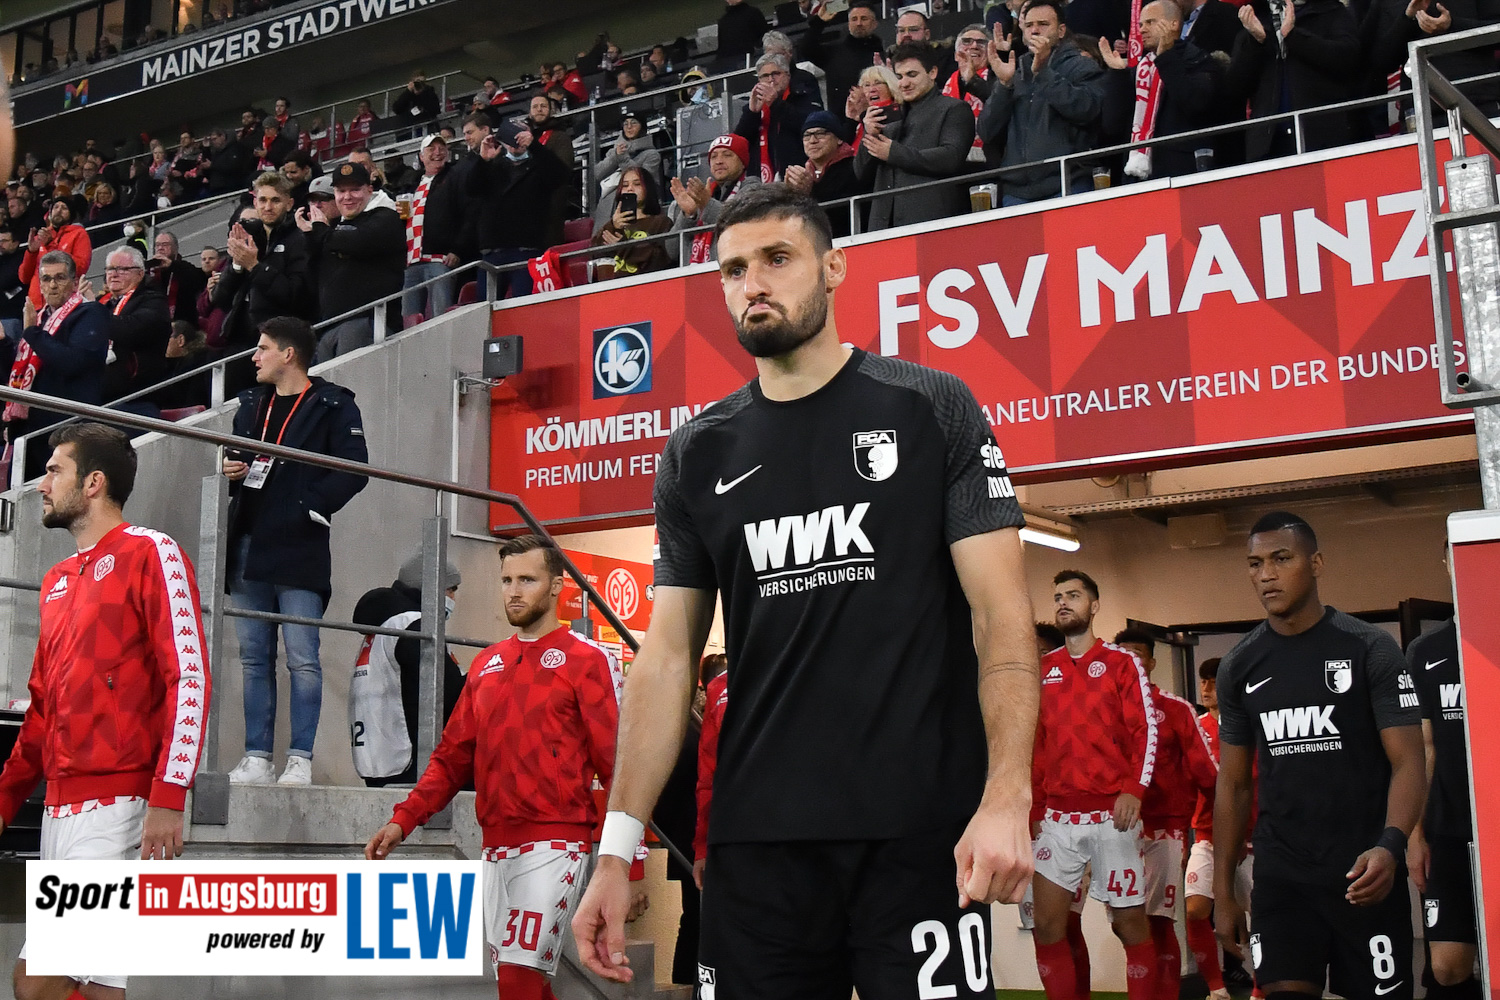 FSV Mainz 05 - FCA 22.10.21 - 11